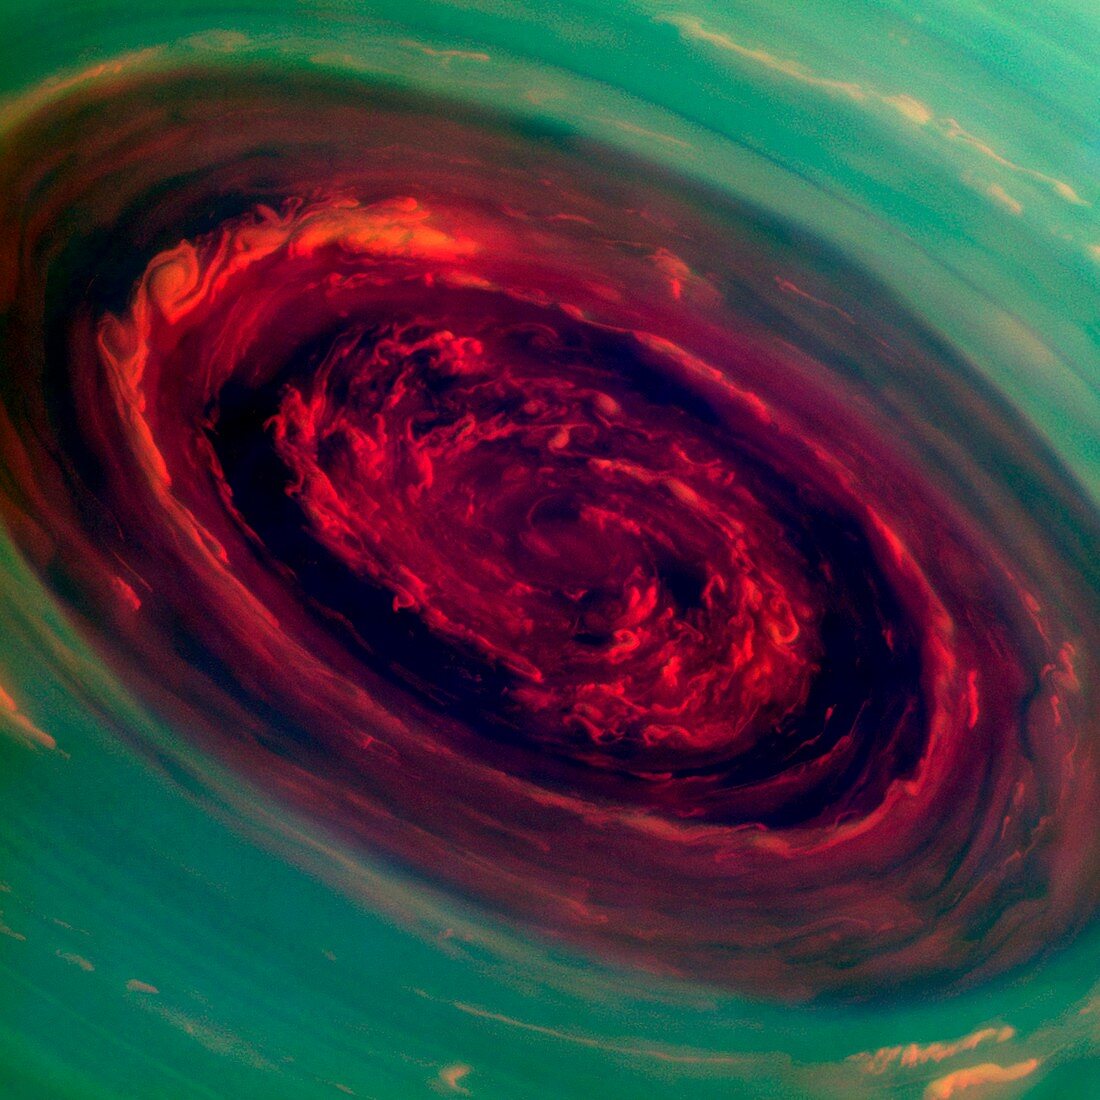 Saturn's north polar storm,Cassini image